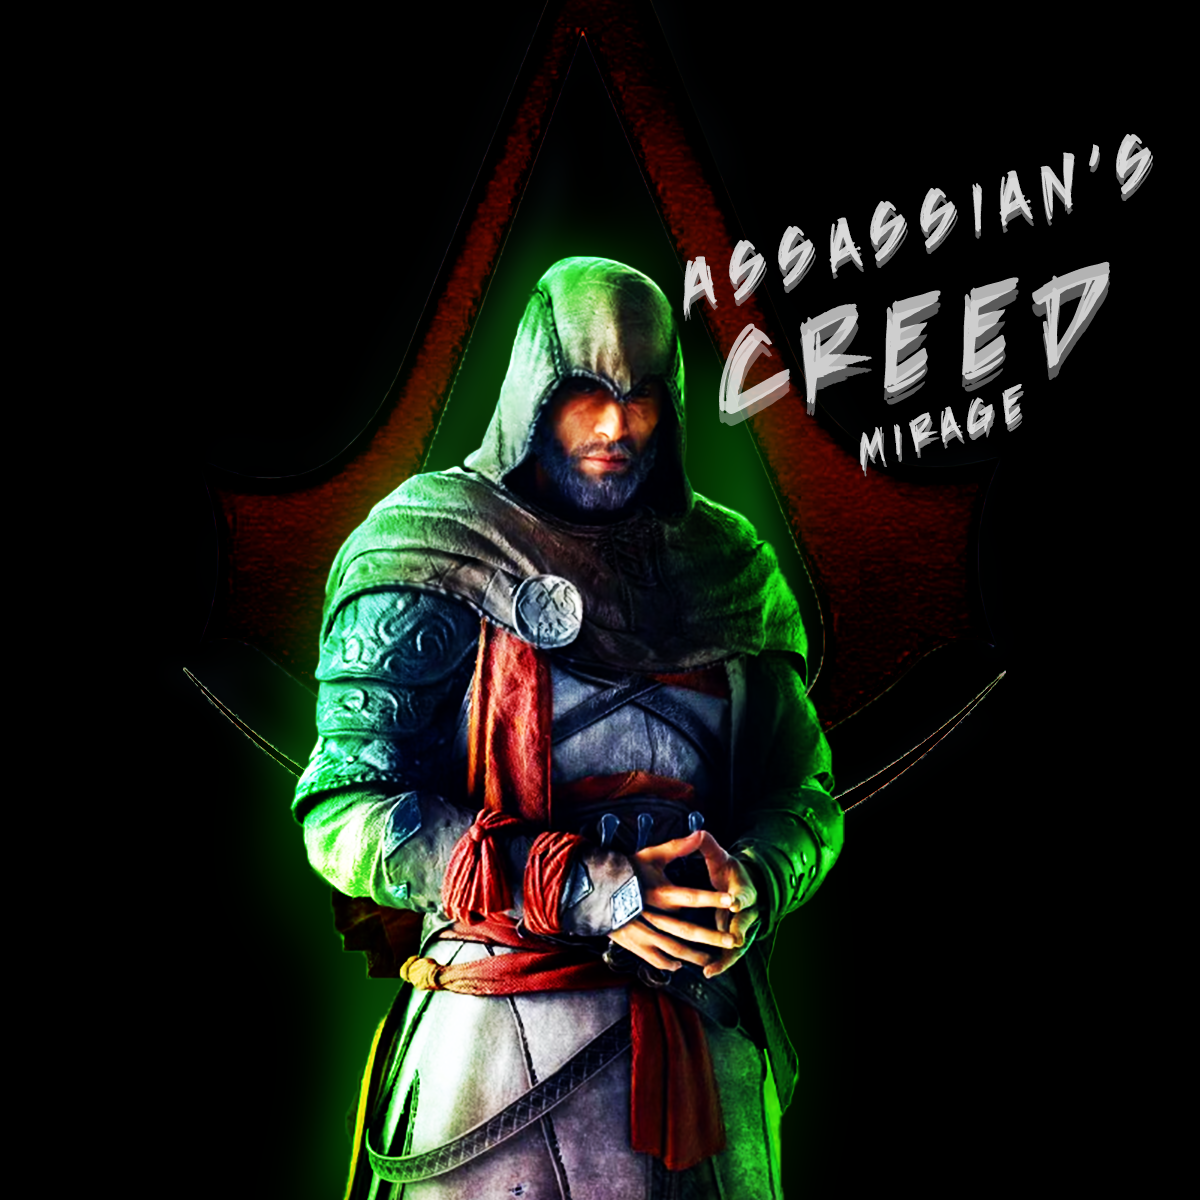 Assassins Creed Bloodlines Vita Wallpaper by maiki58 on DeviantArt